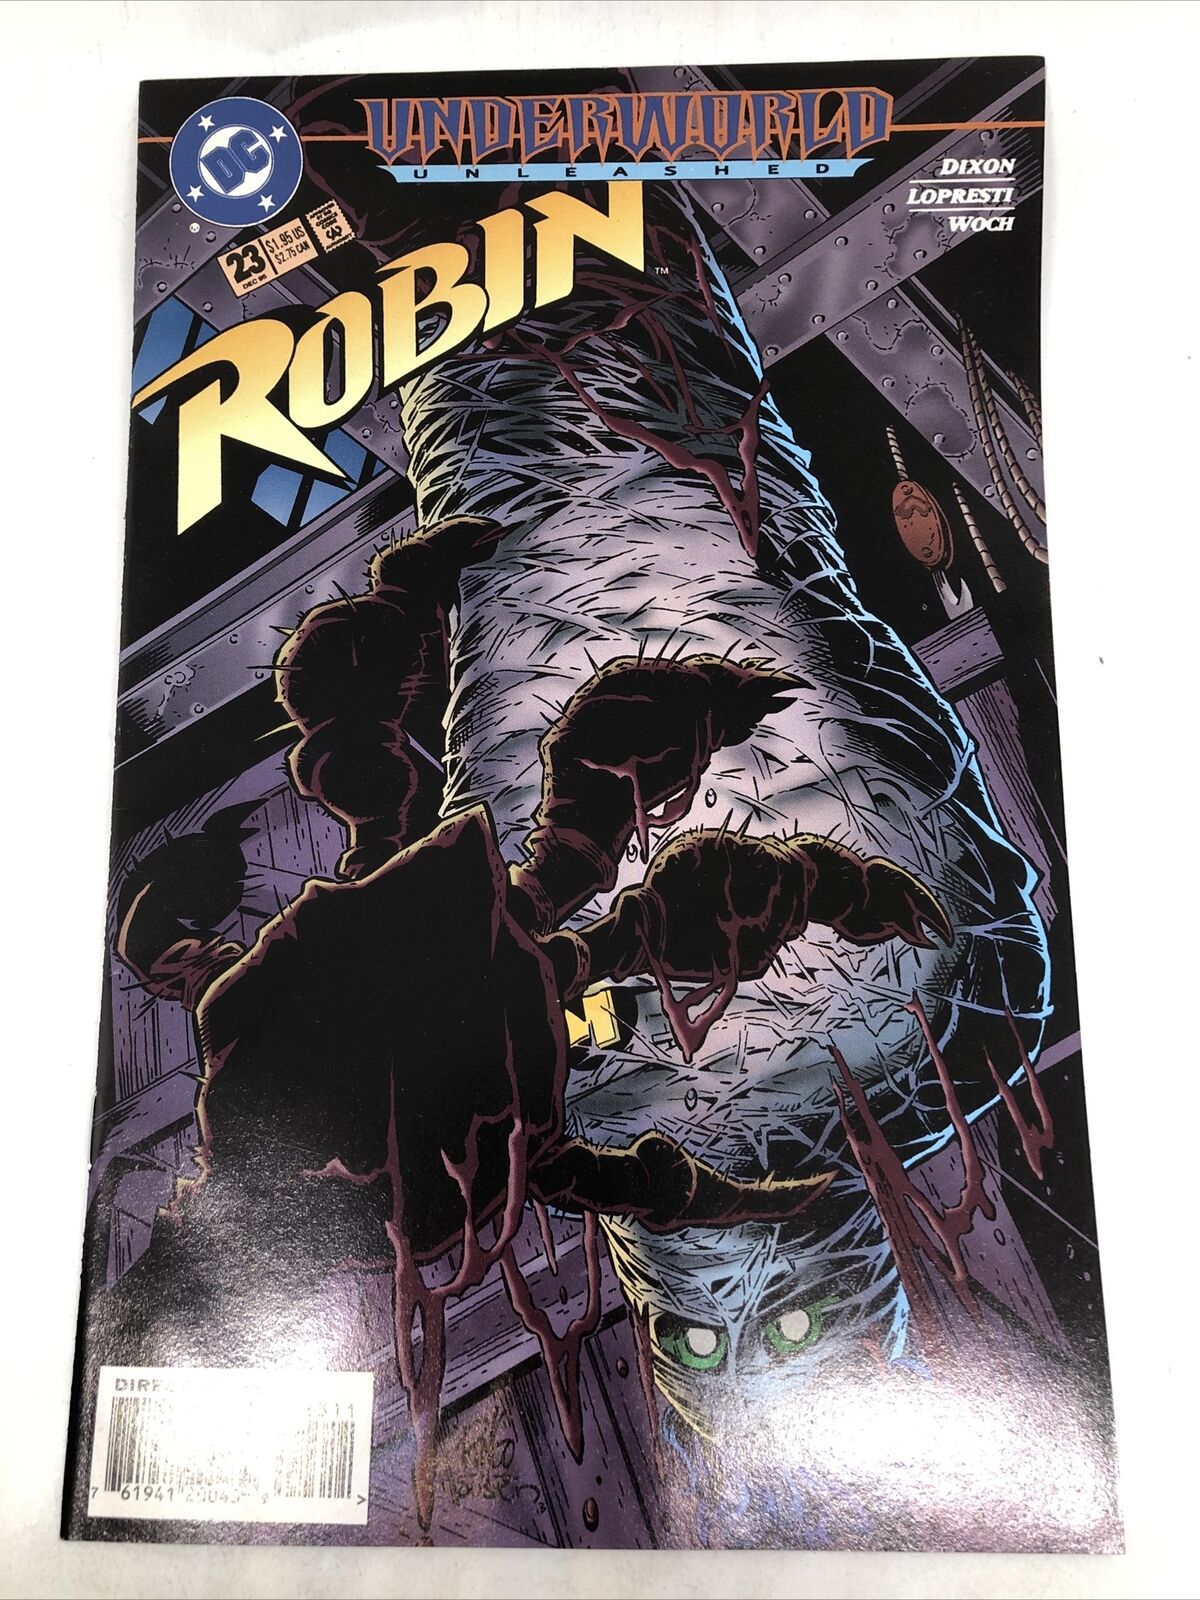 Robin #23 December 1995 DC Comics